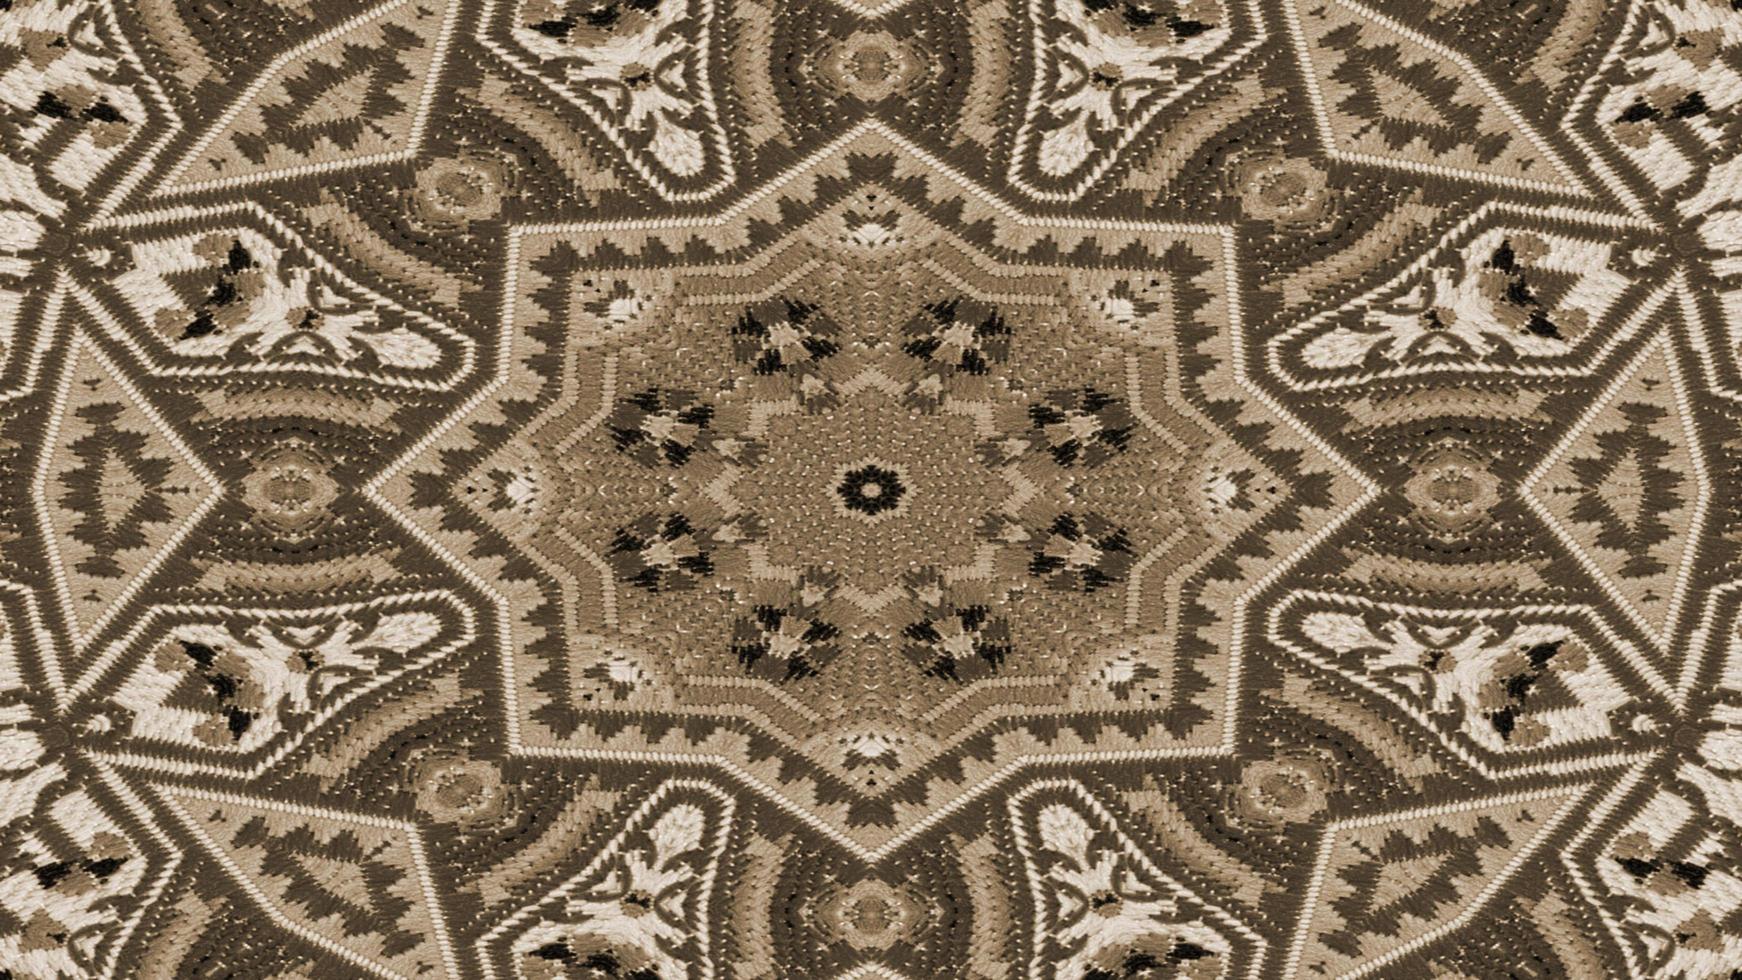 caleidoscopio di tappeti etnici autentici foto